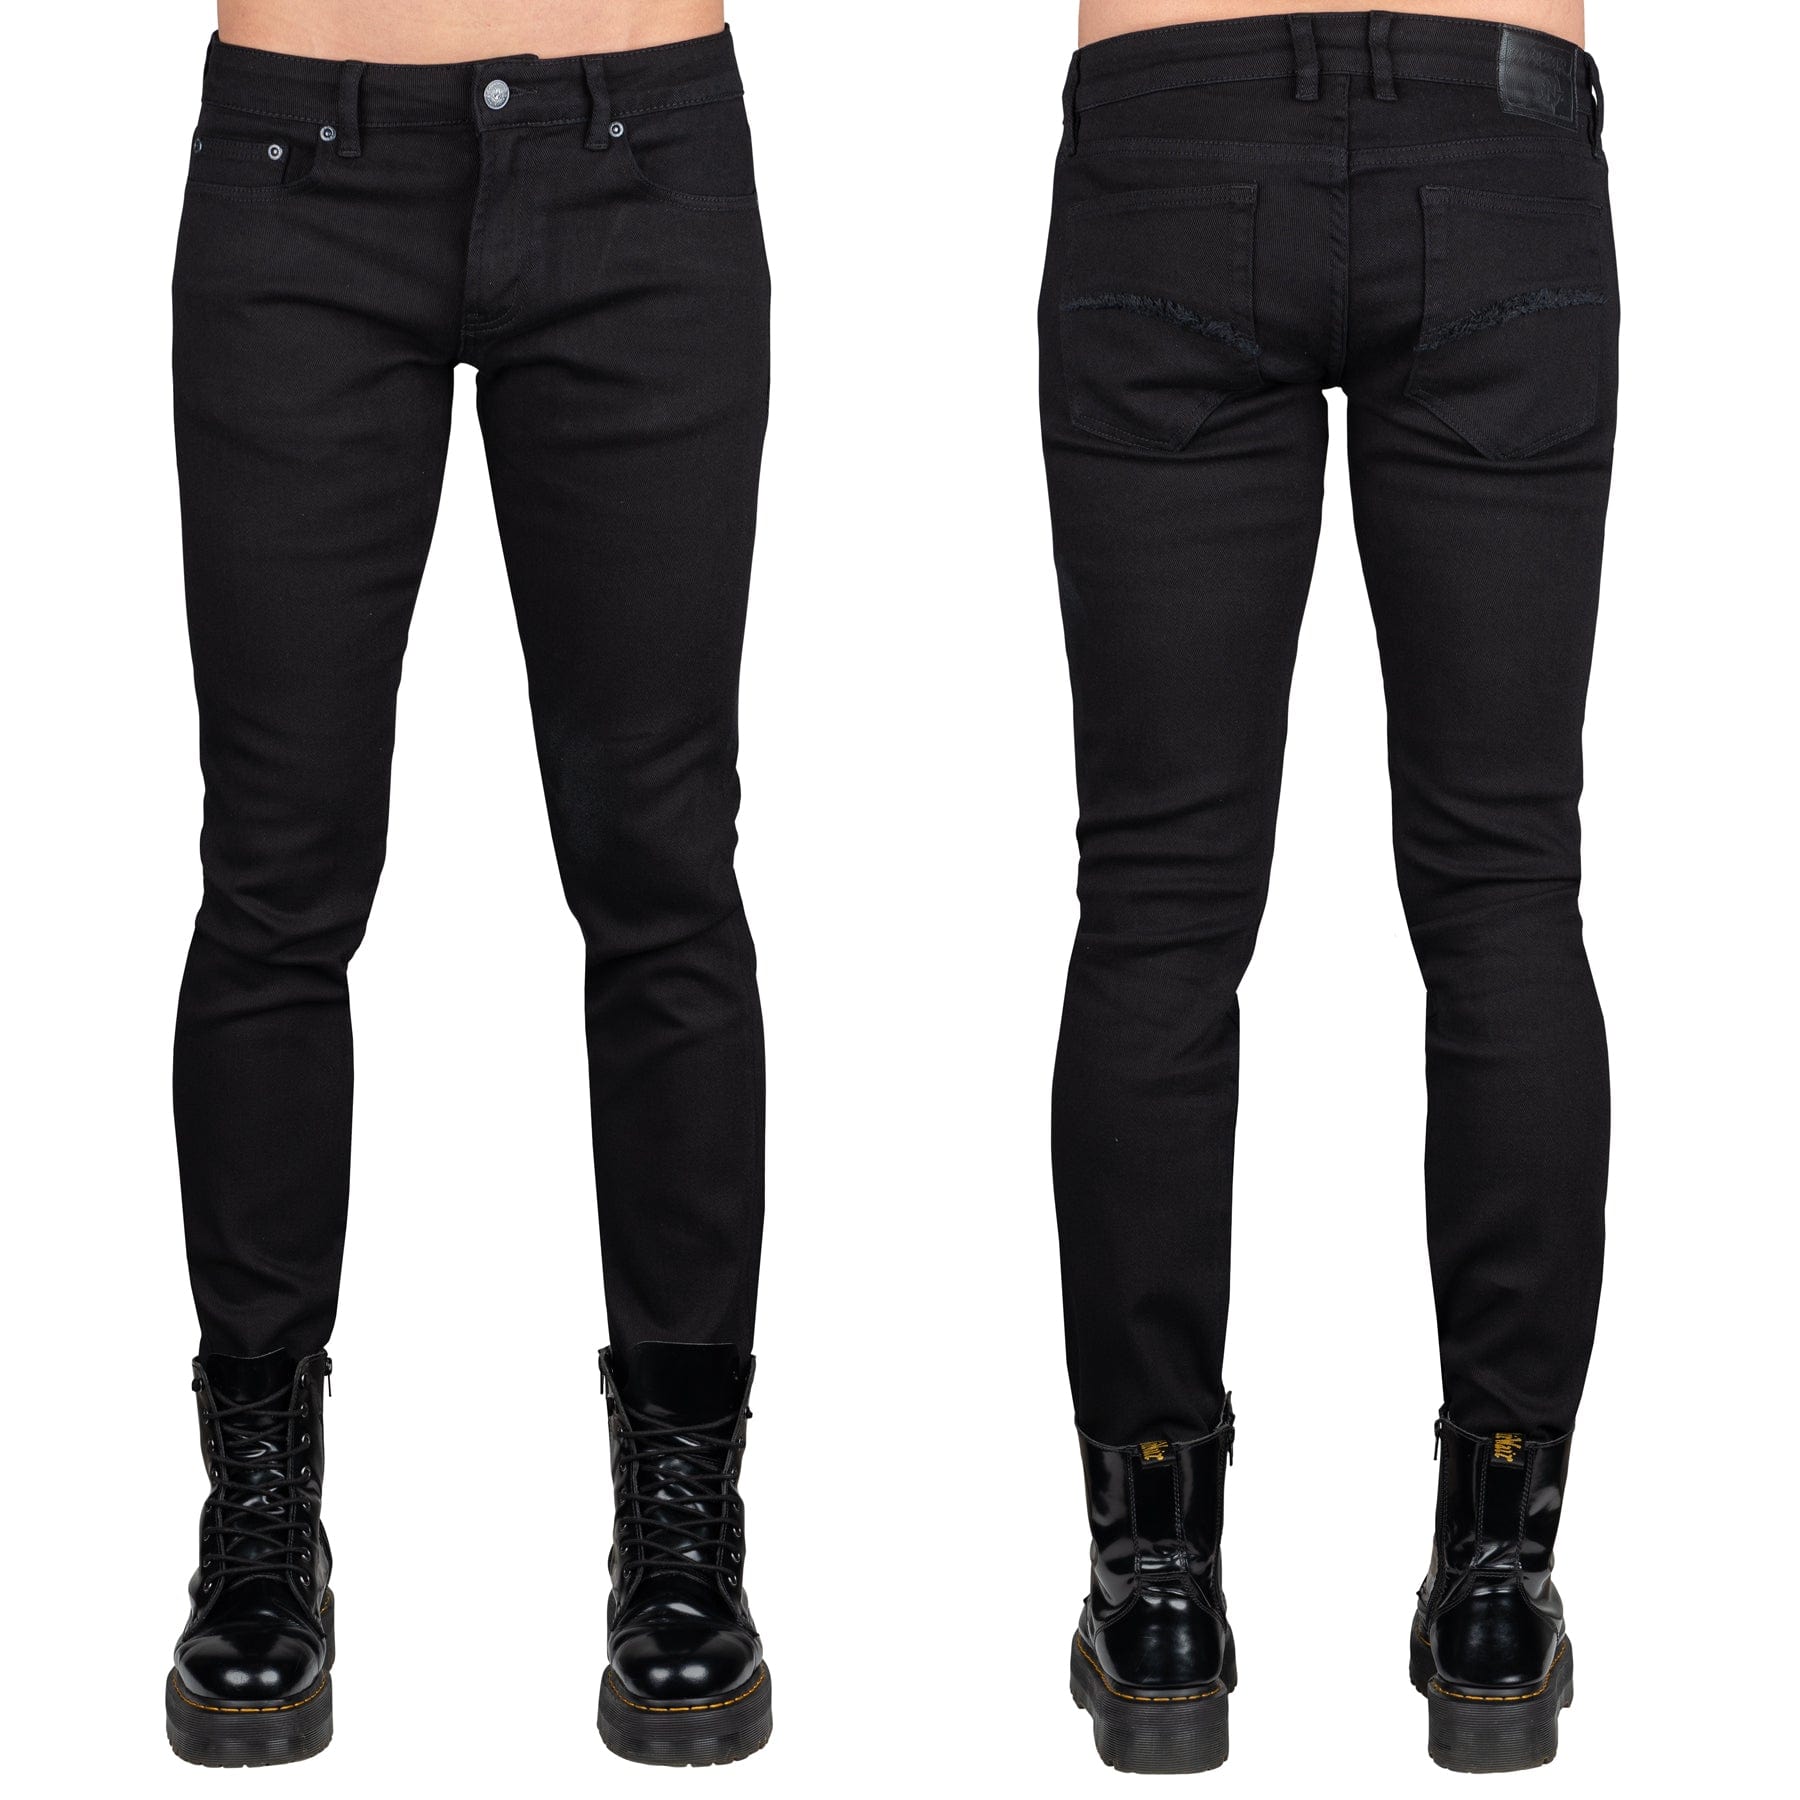 Wornstar Clothing Mens Jeans. Rampager Denim Jeans - Black